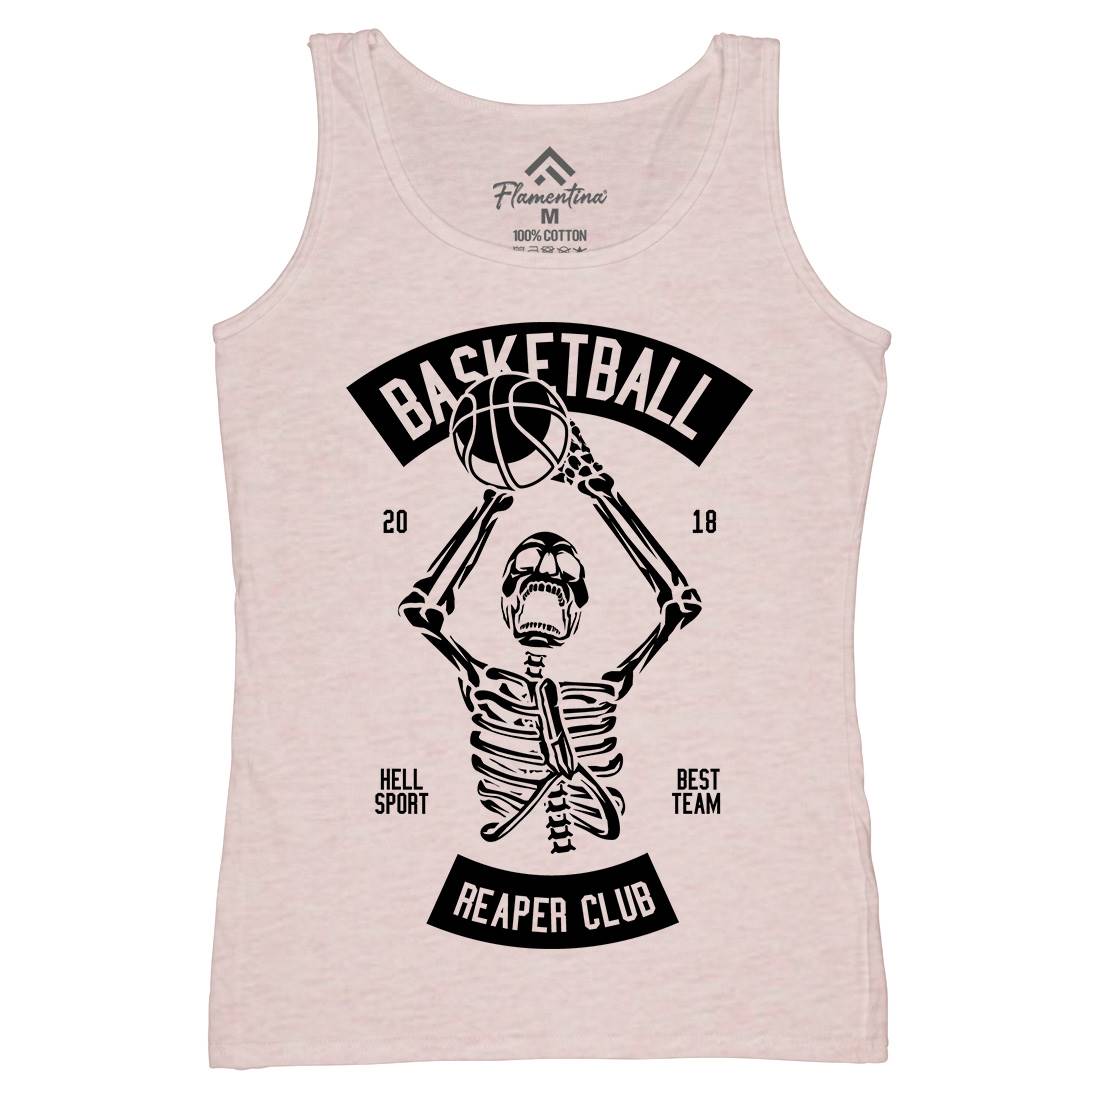 Basketball Reaper Club Womens Organic Tank Top Vest Sport B491